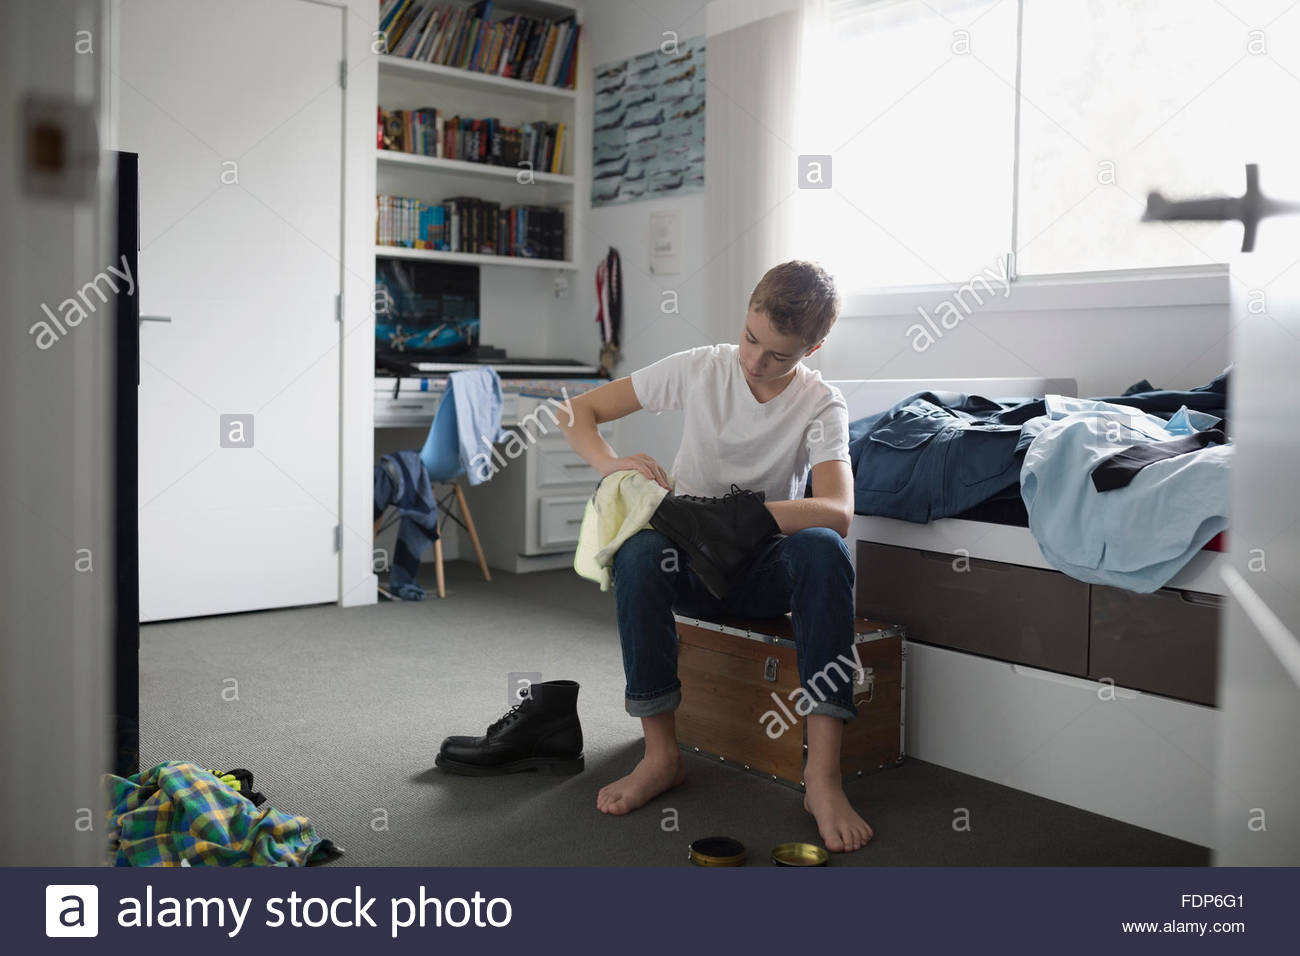 Boy shining cadet uniform shoes in bedroom Stock Photo